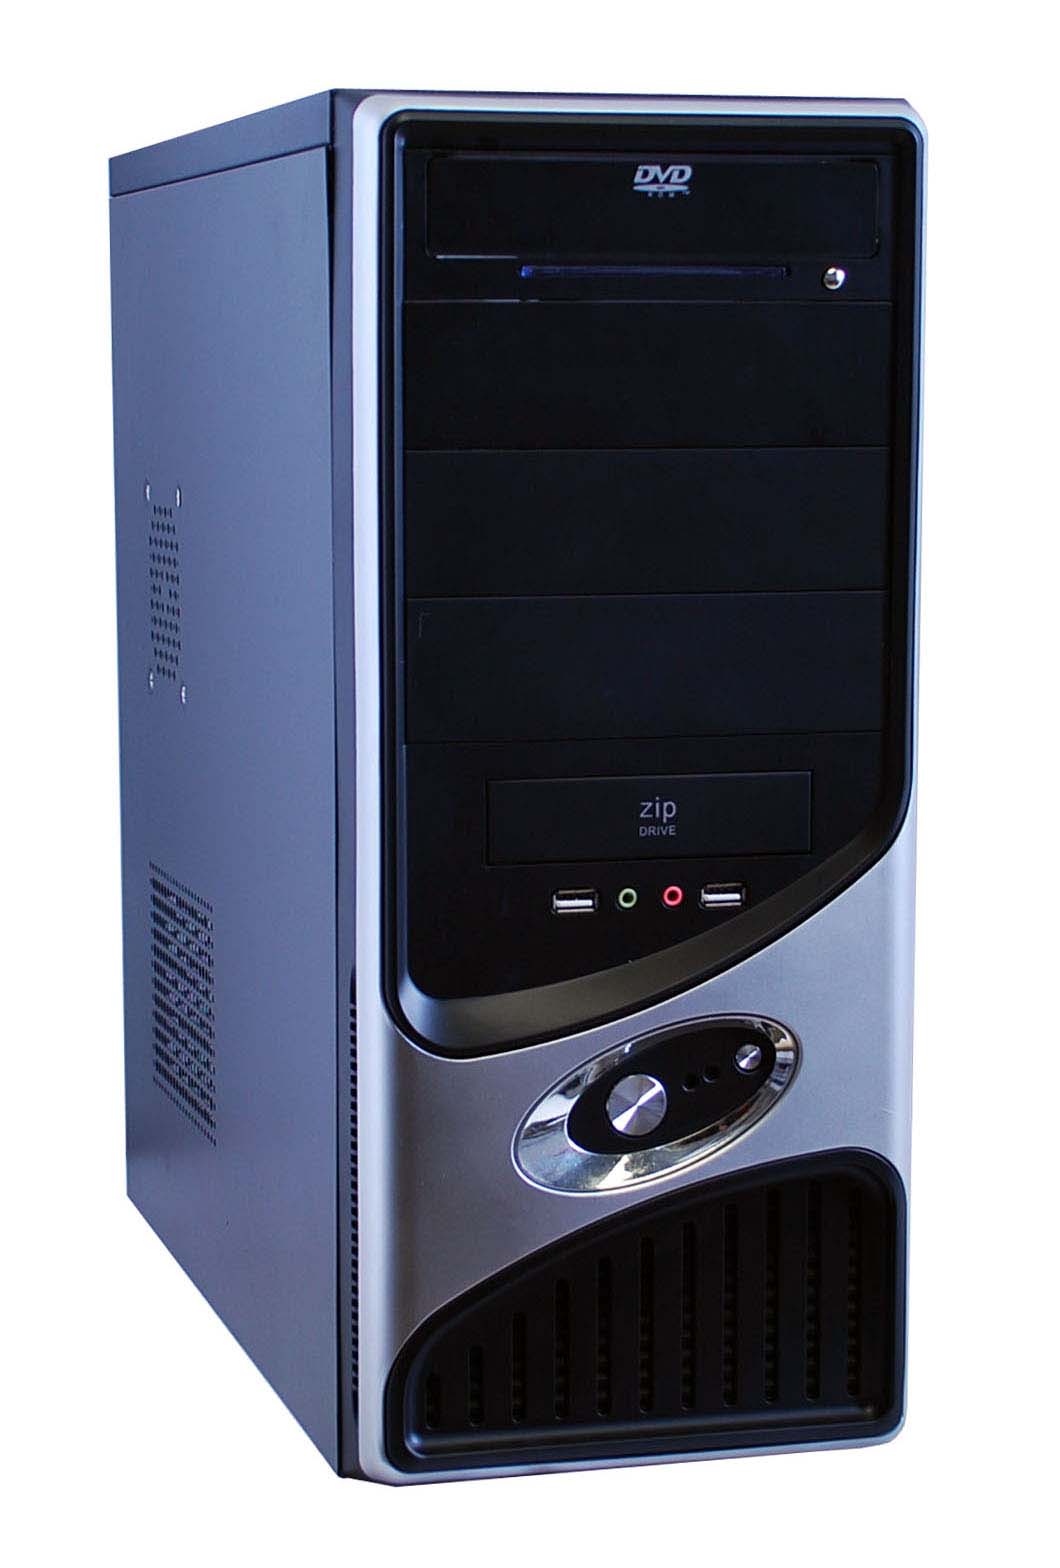 Brand New Pentium 4 Computer Cheap Price....  large image 0